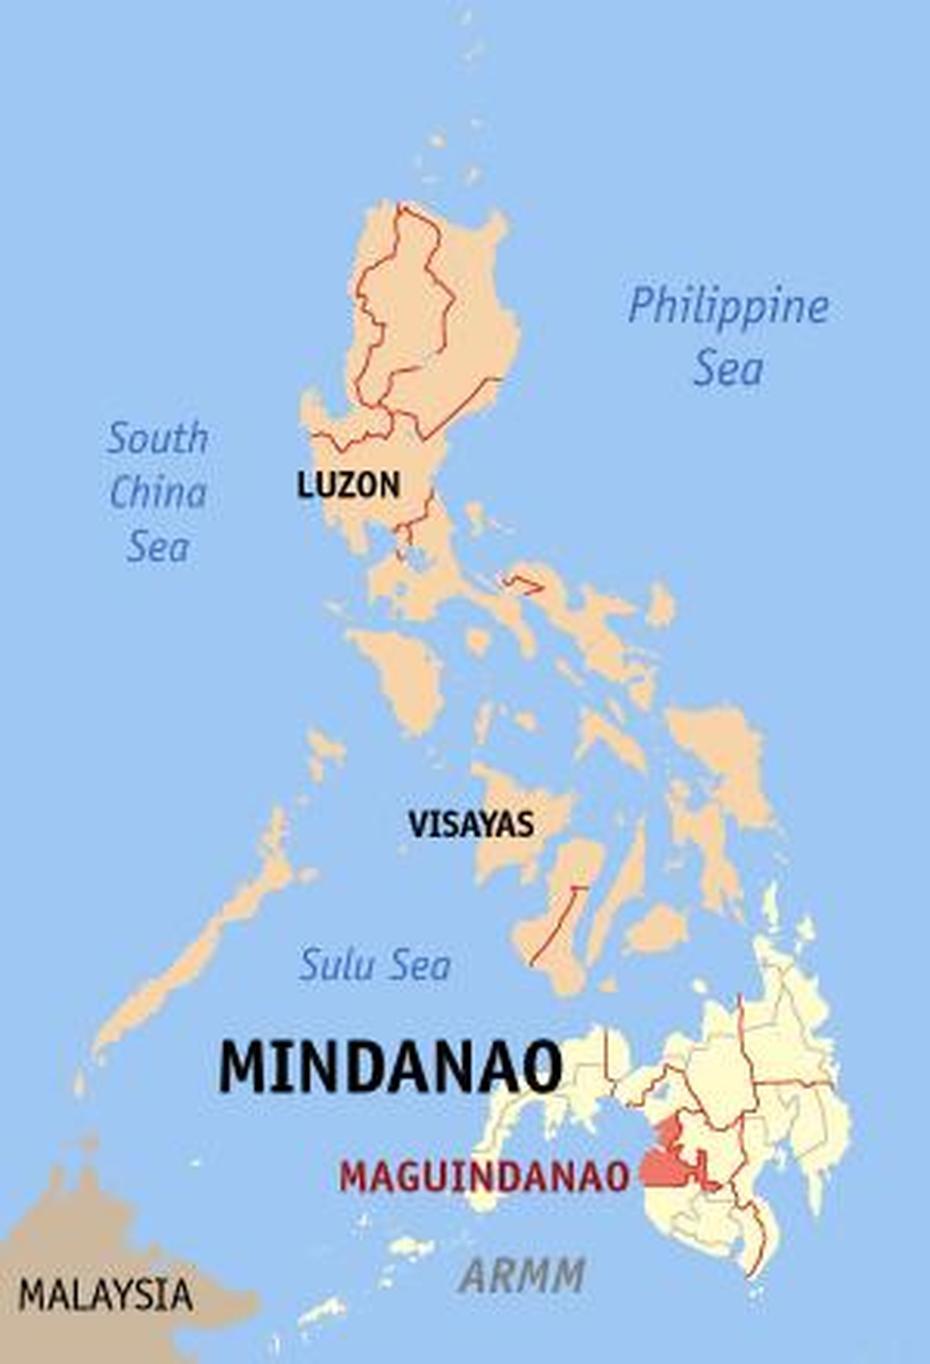 Landasan (Sarmiento), Parang, Maguindanao, Philippines – Philippines, Maguing, Philippines, Philippines Powerpoint Template, Philippines Road